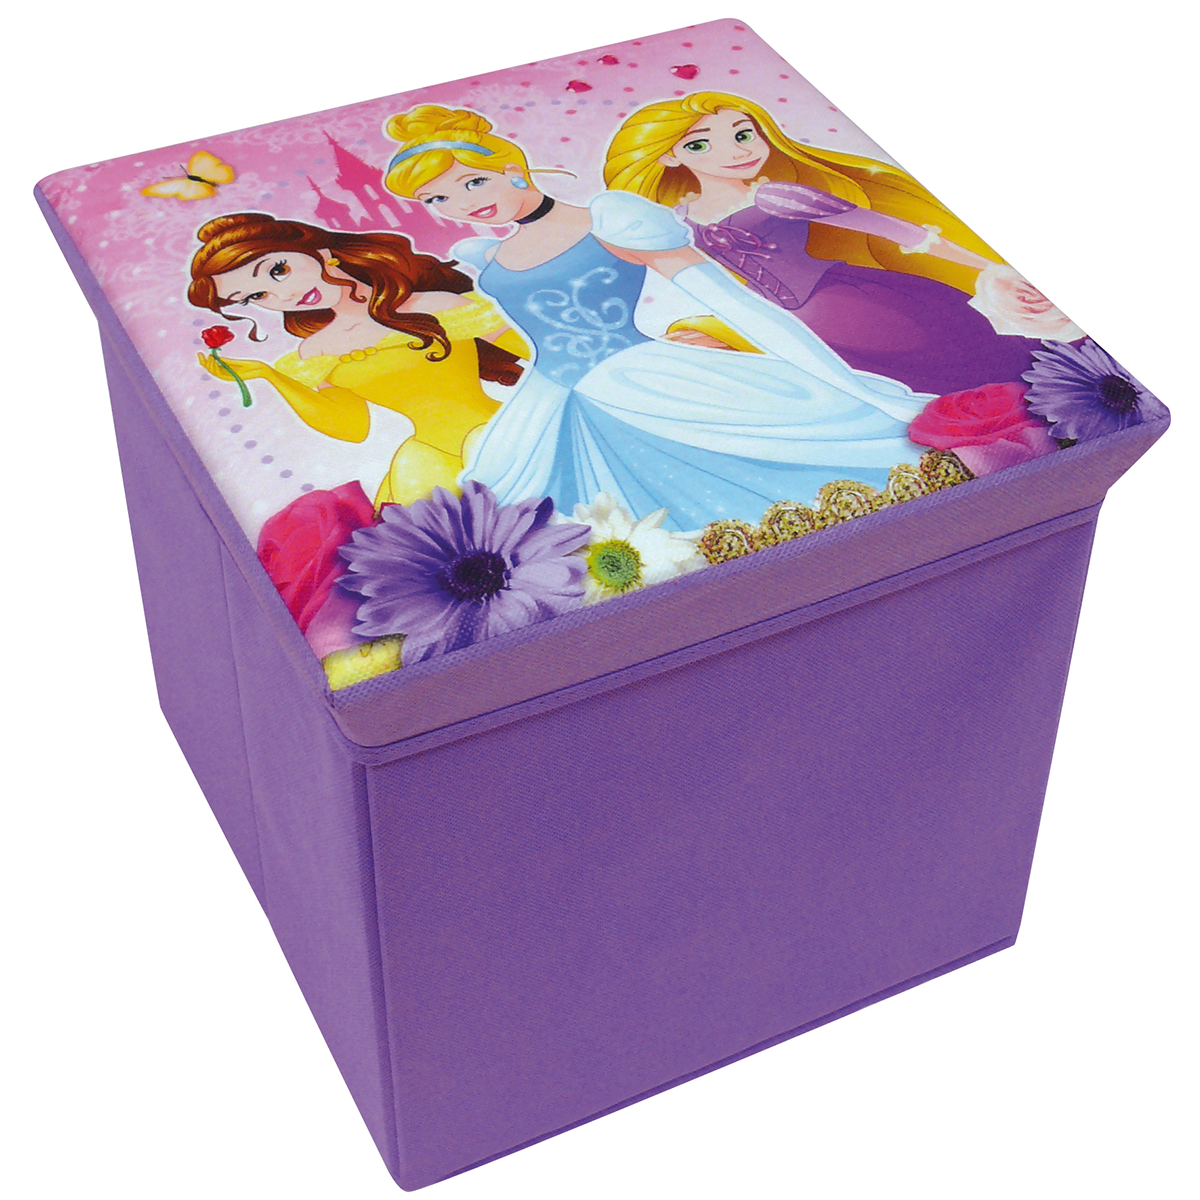 Disney Princess Speelgoedkist Krukje Opvouwbaar 31 x 31 x 29 cm